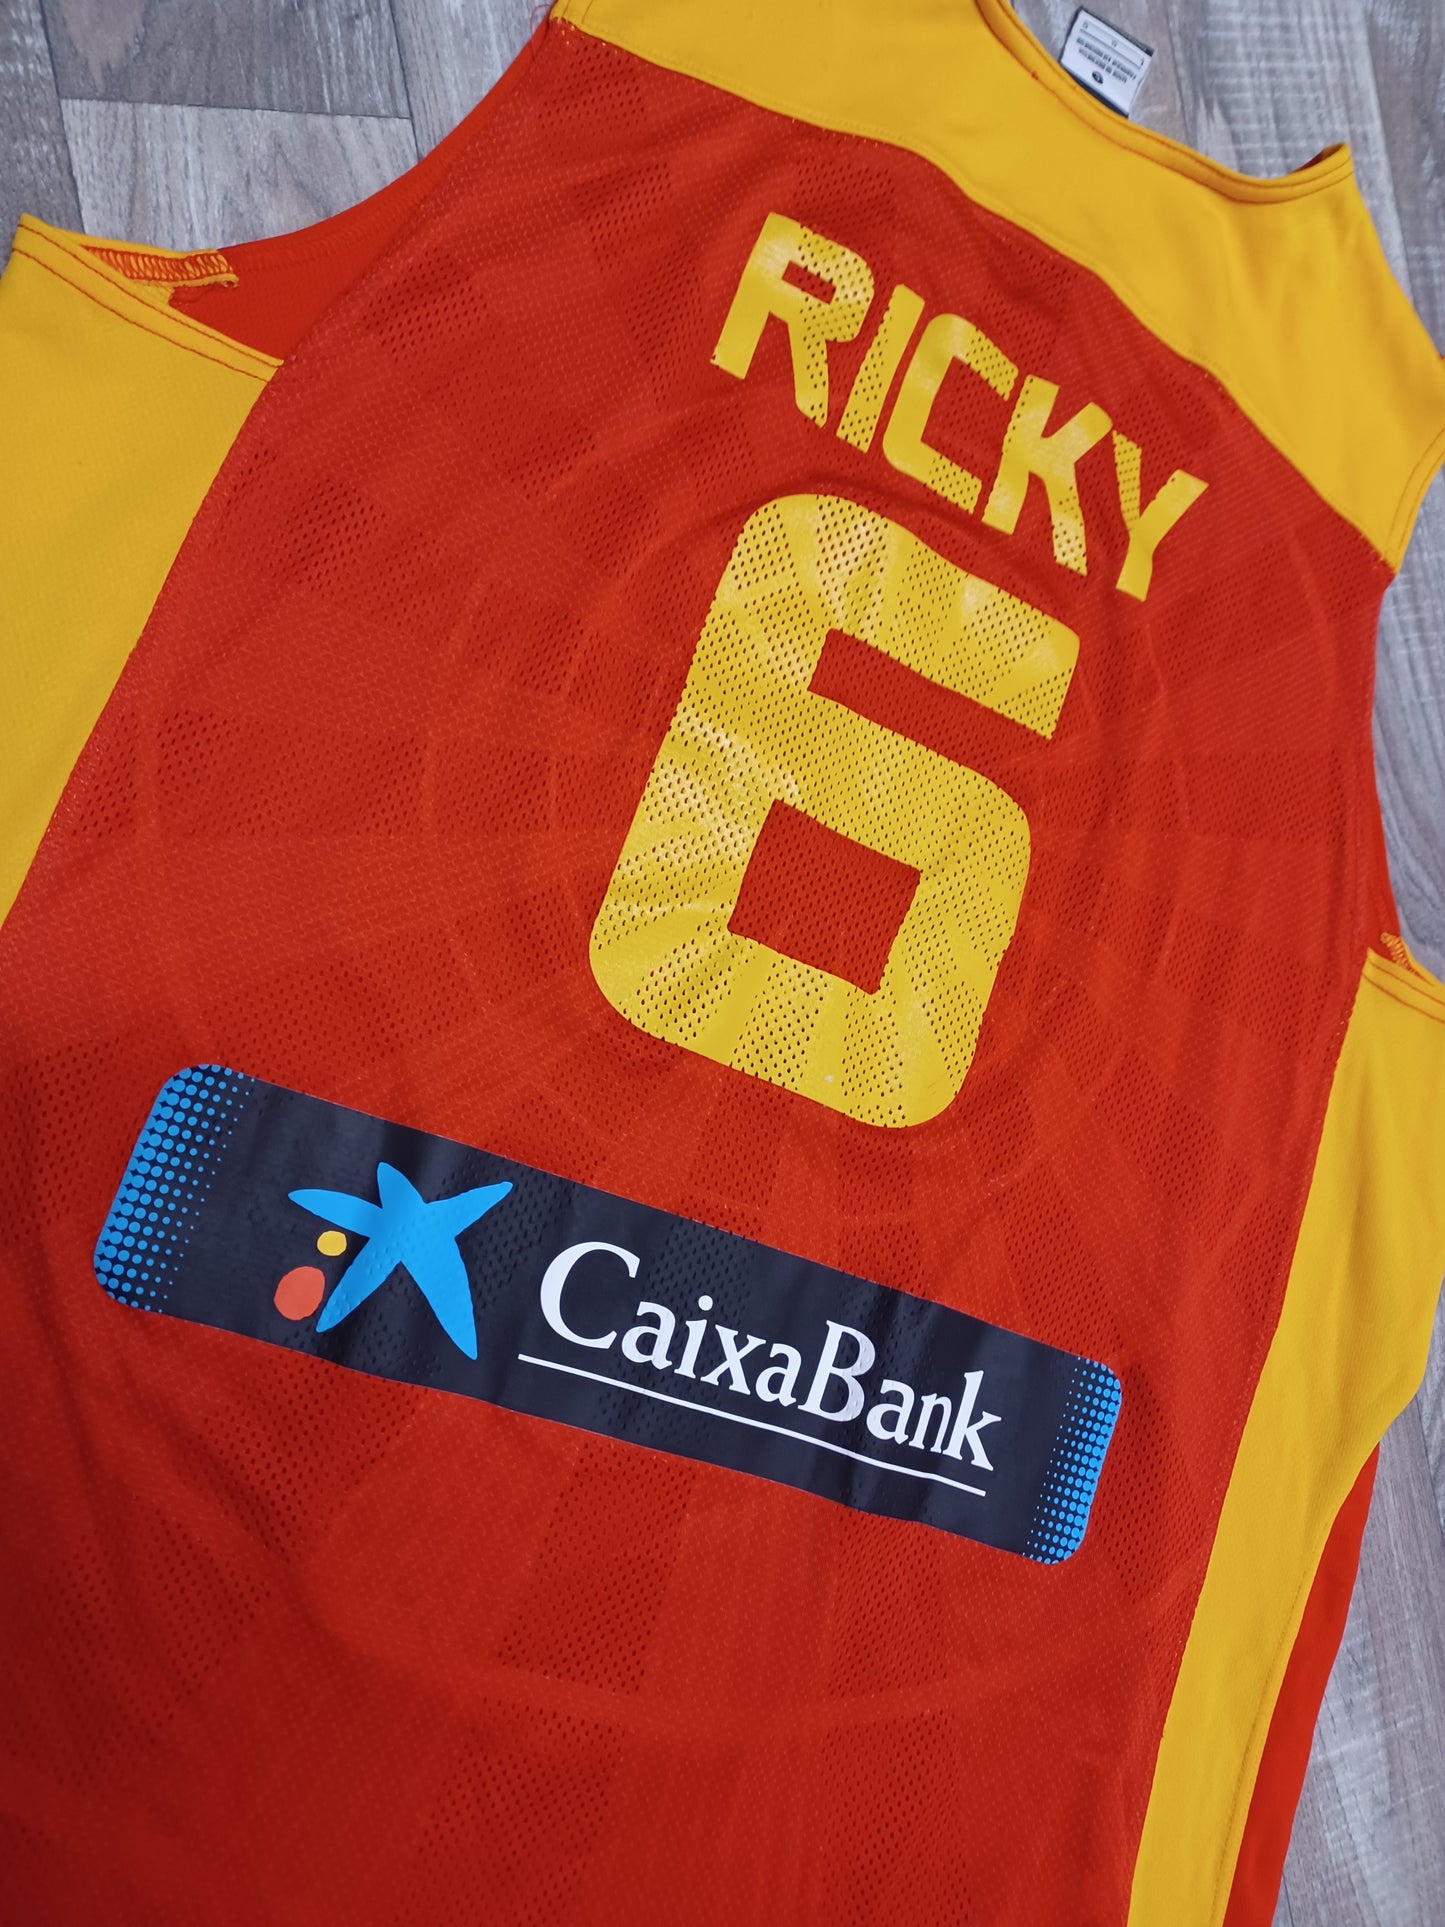 Ricky Rubio Spain Basketball Jersey Size Large